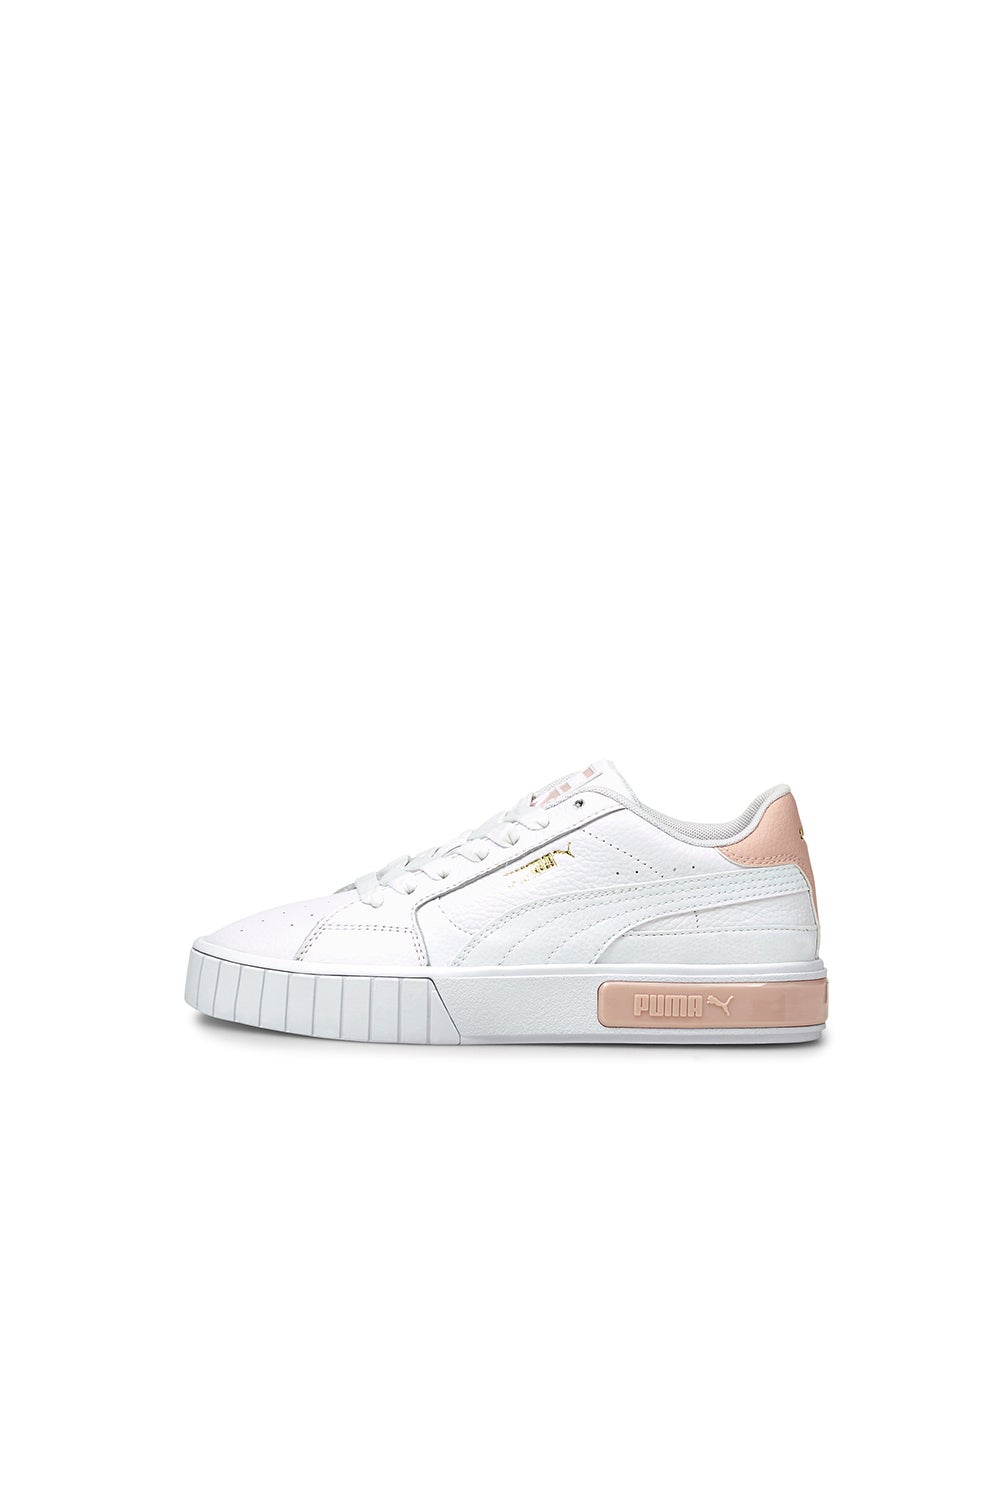 Puma Cali Star Women's Sneakers White 